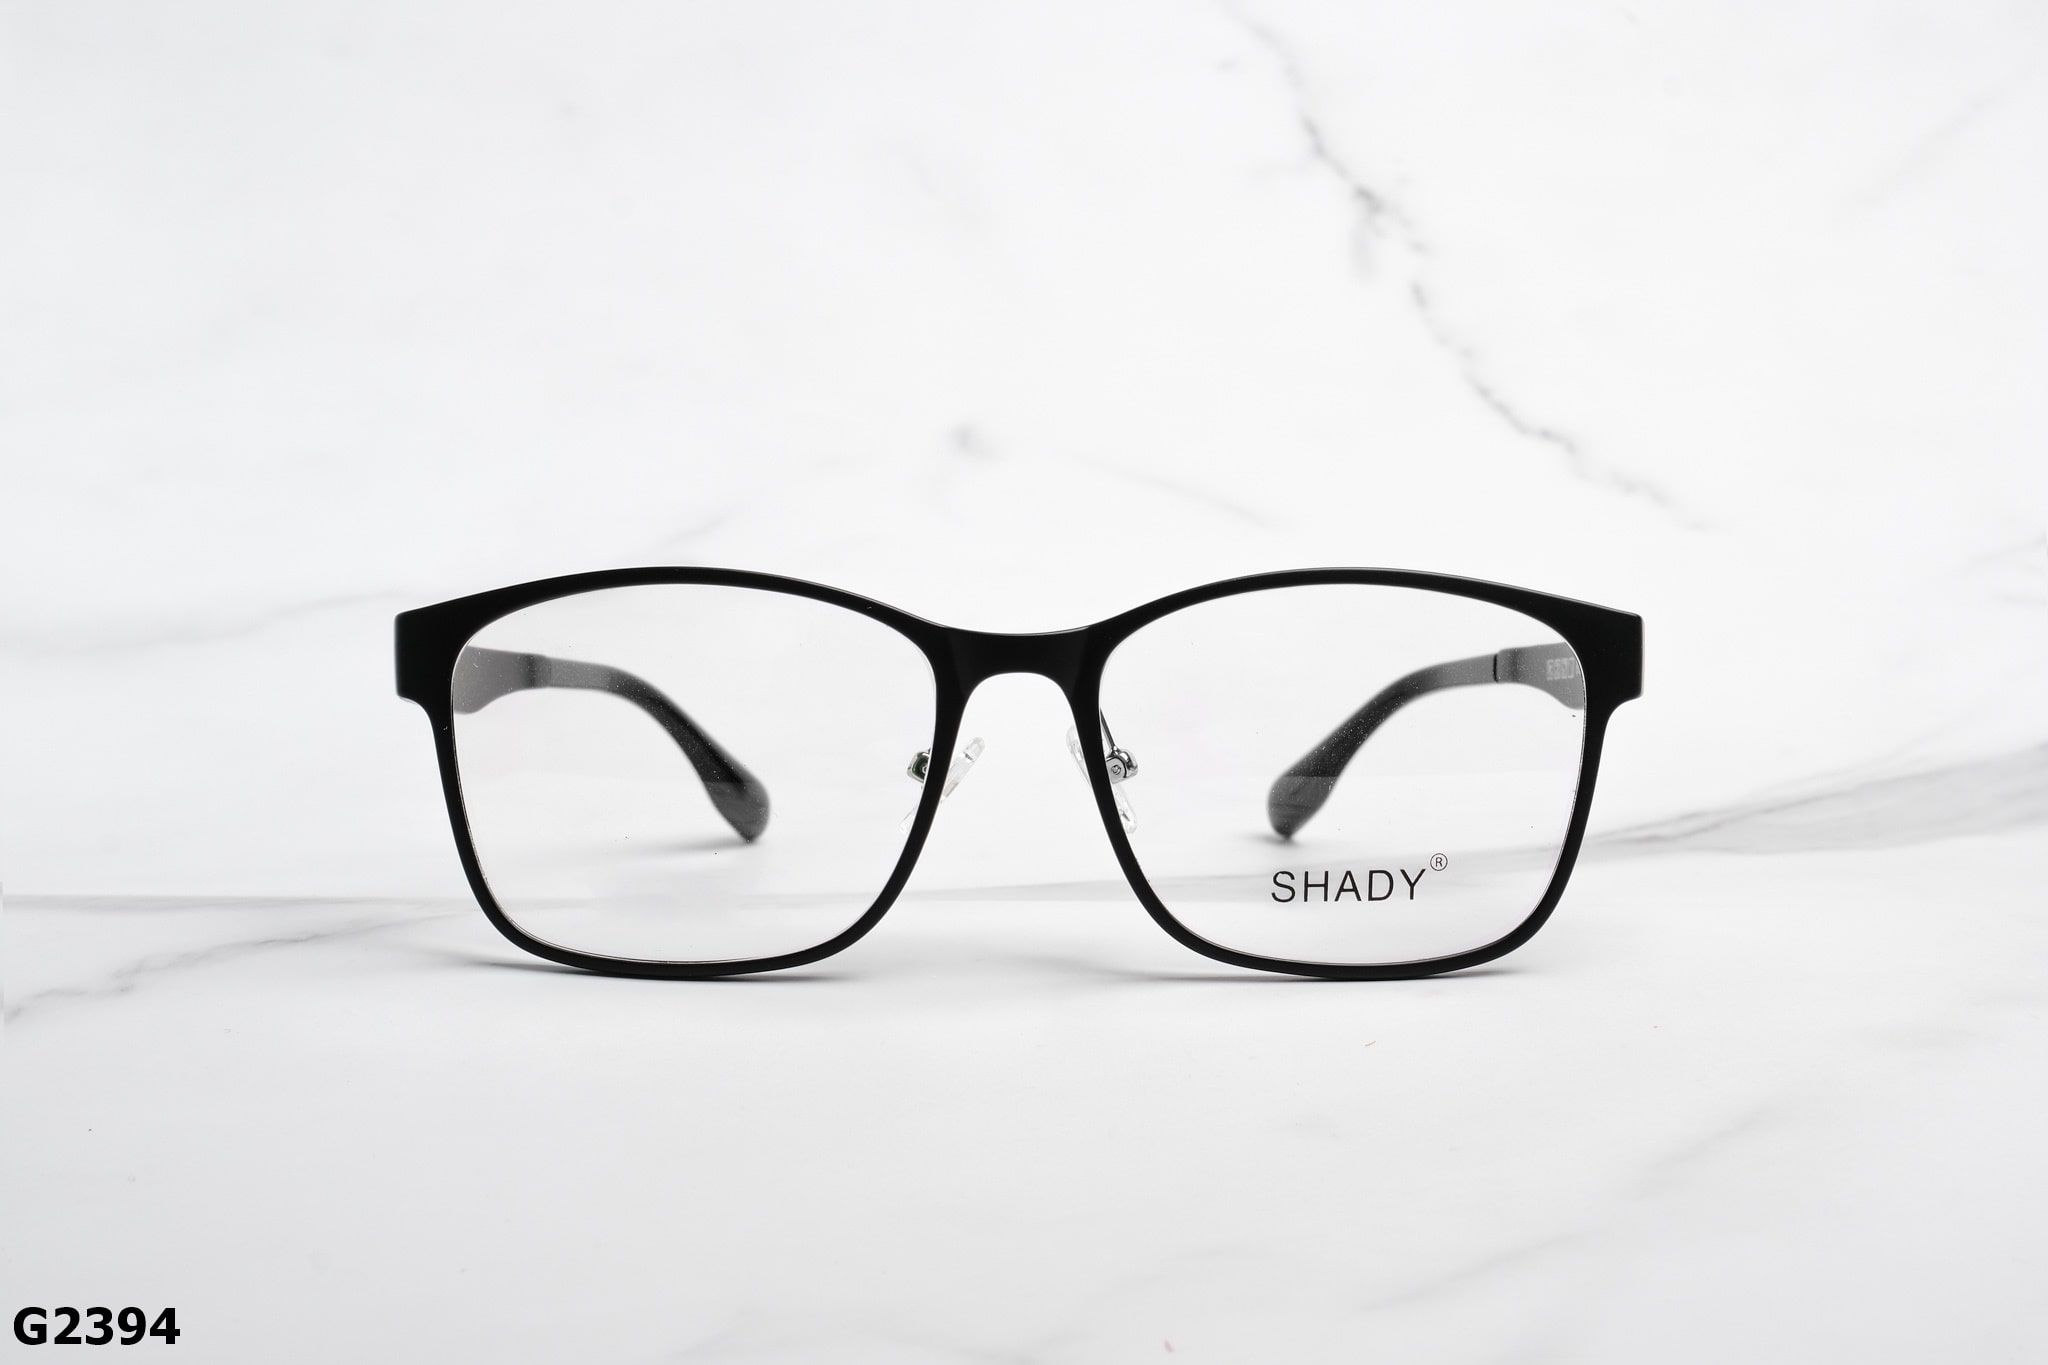  SHADY Eyewear - Glasses - G2394 